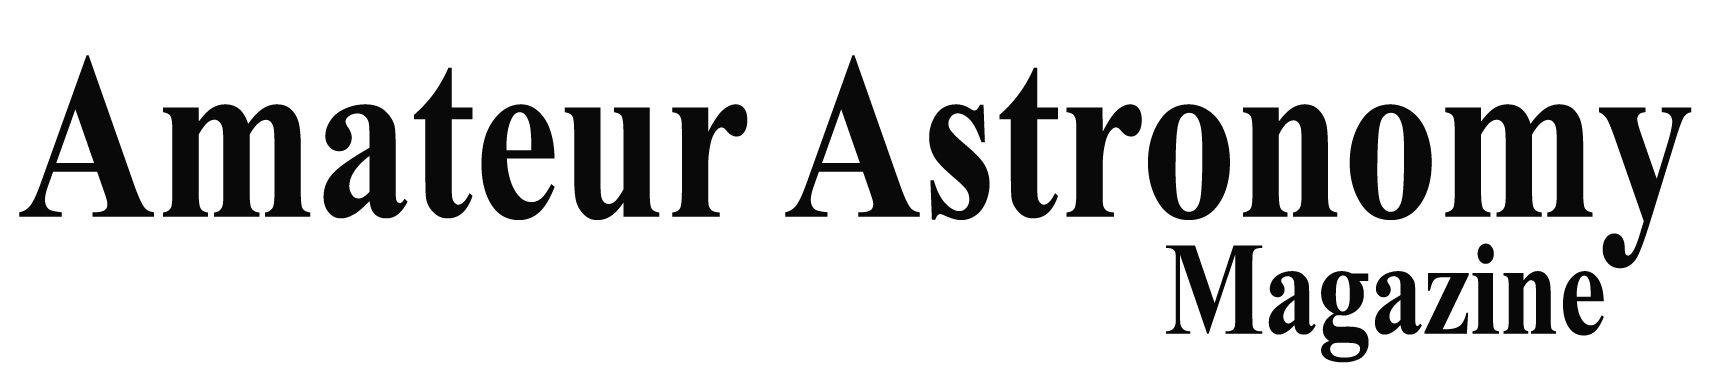 Astronomy Magazine Logo - Amateur Astronomy